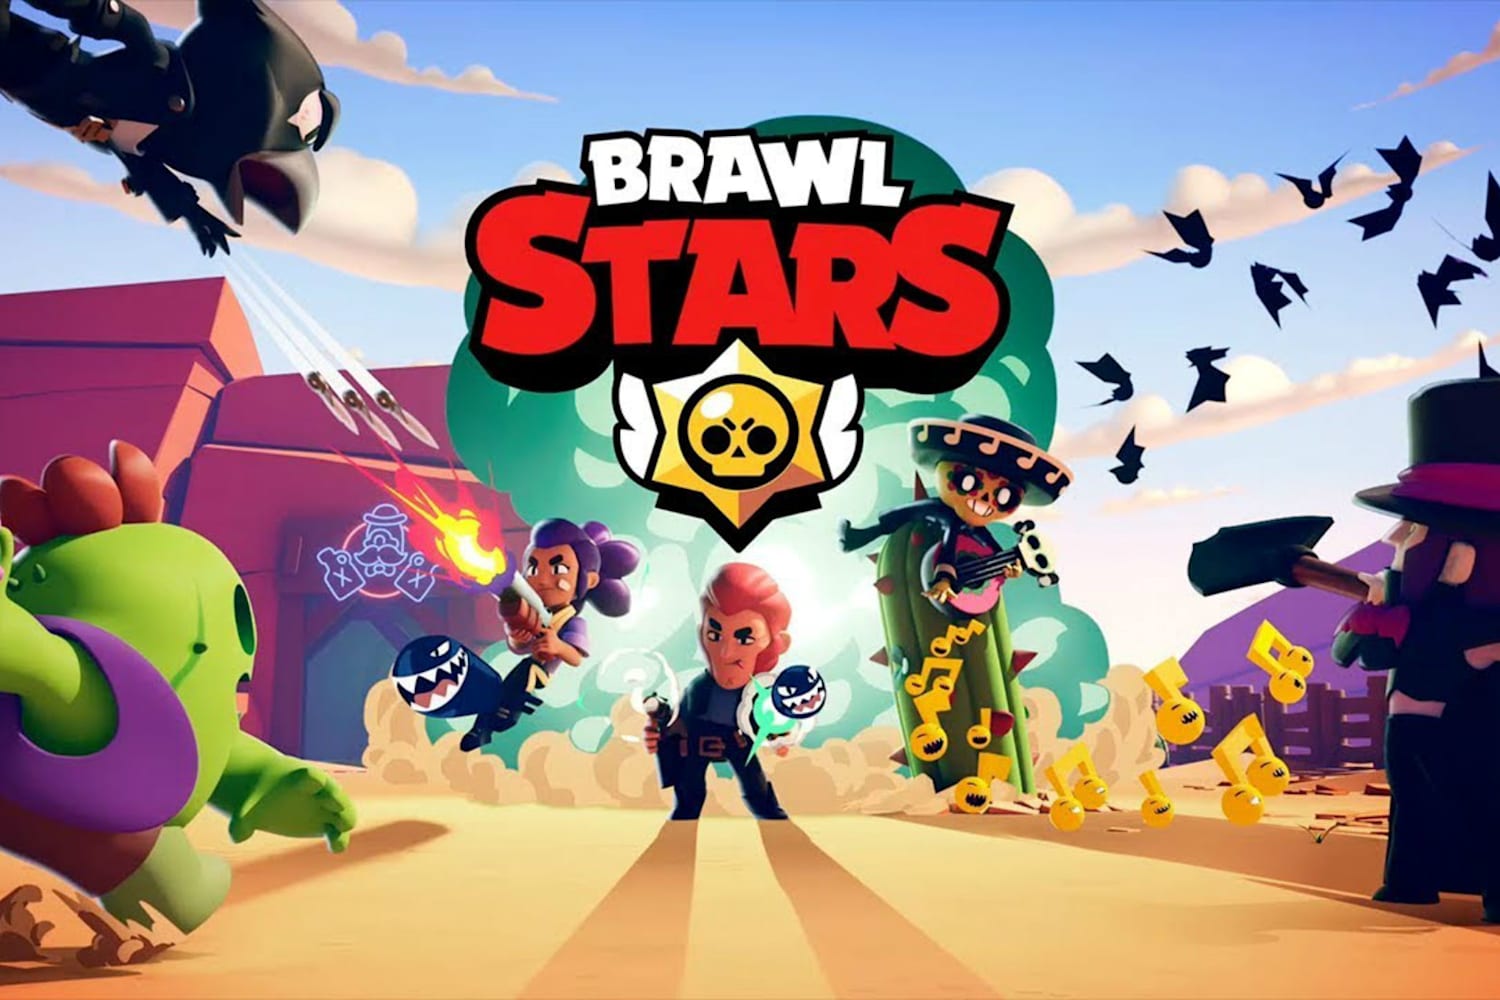 How To Get Into Brawl Stars 2020 S Meta Explained - new big game meta brawl stars